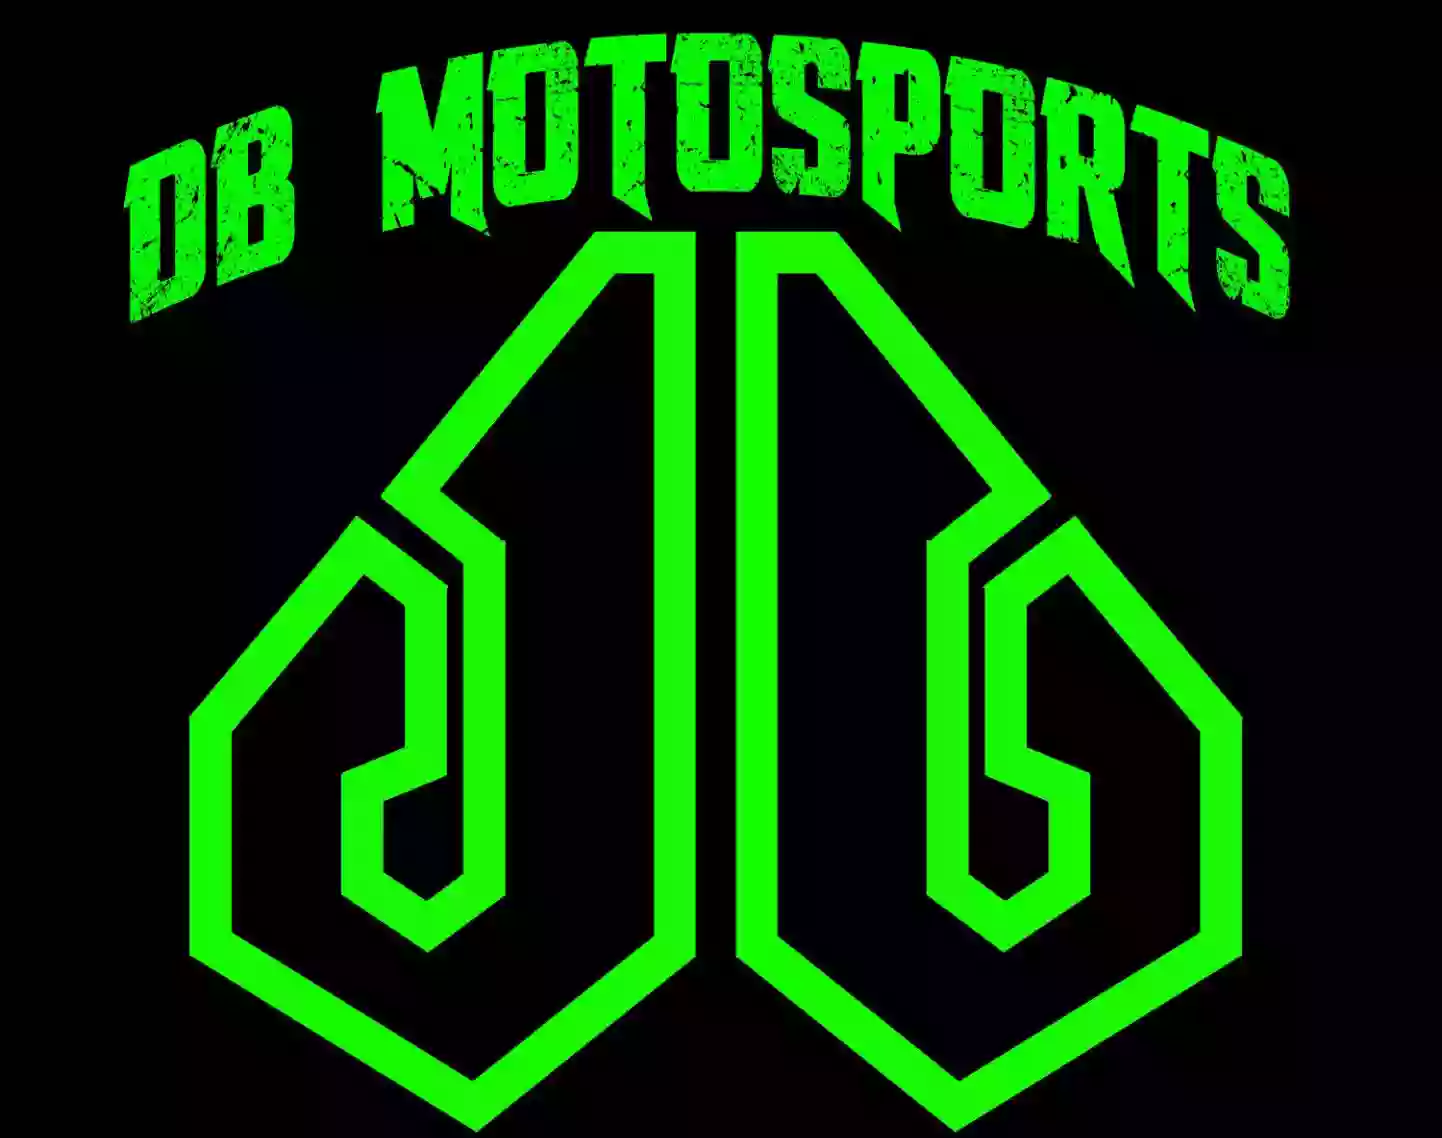 DB Motosports & Auto Repair, LLC.